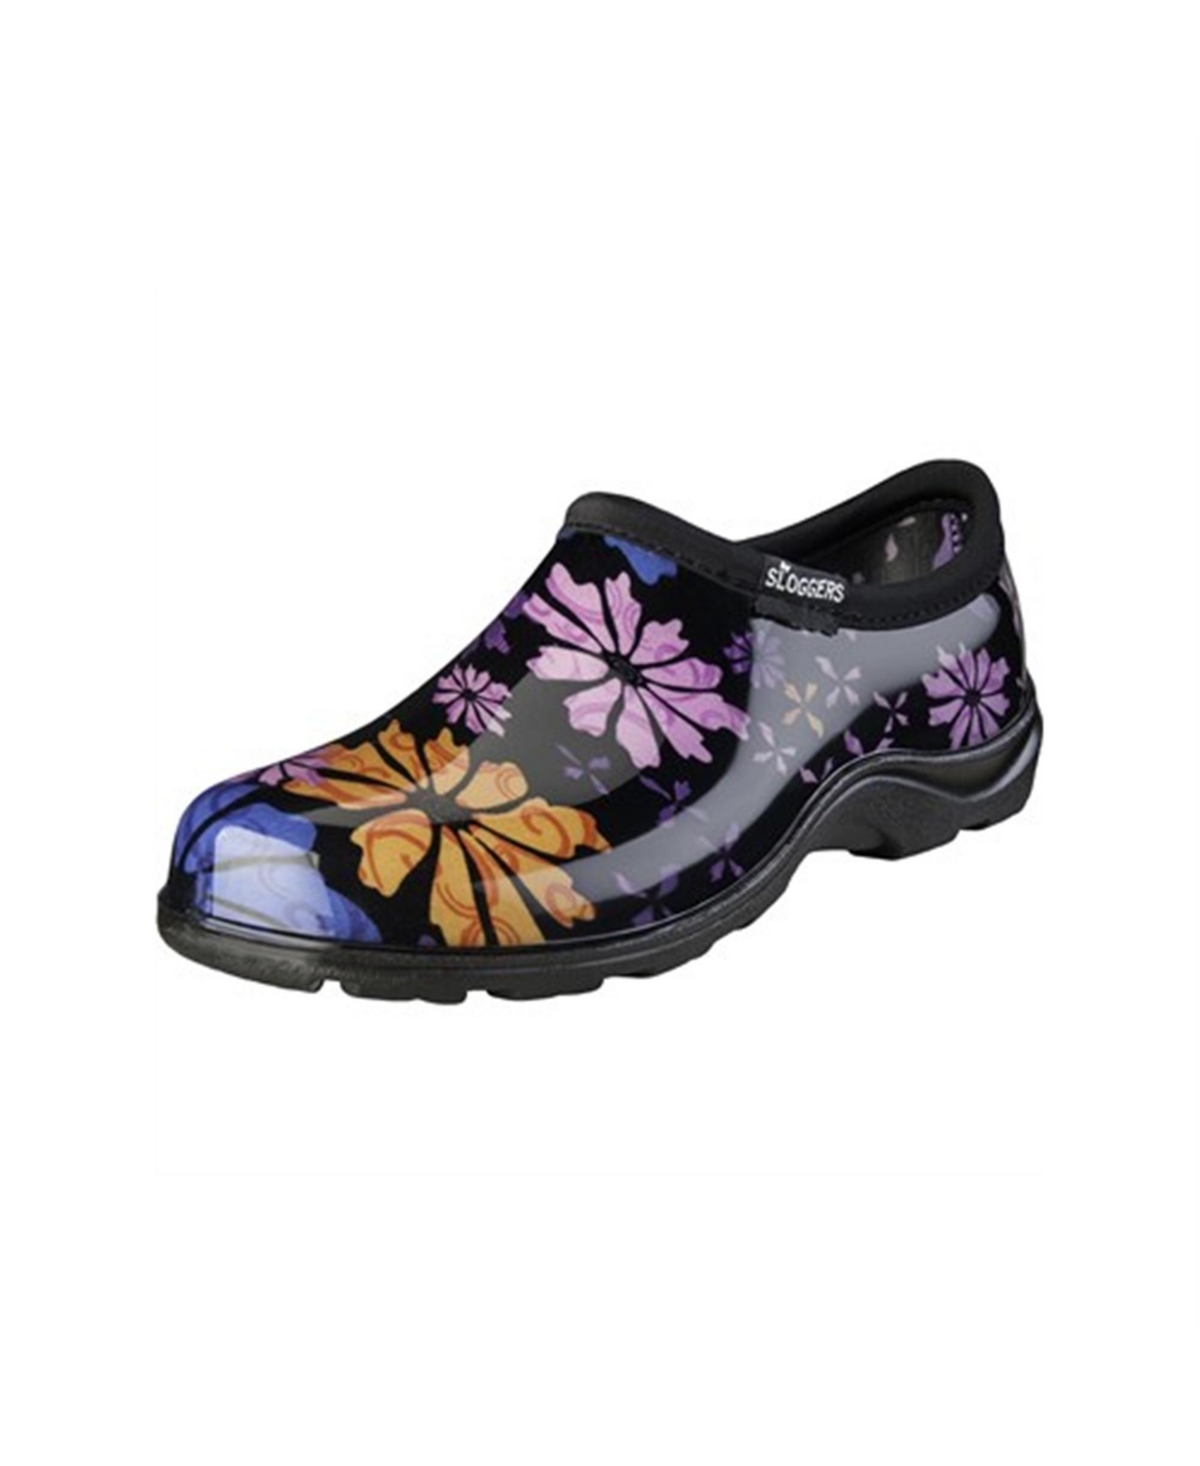 Womens Rain and Garden Shoes, Flower Power Print, Size 10 - Multi